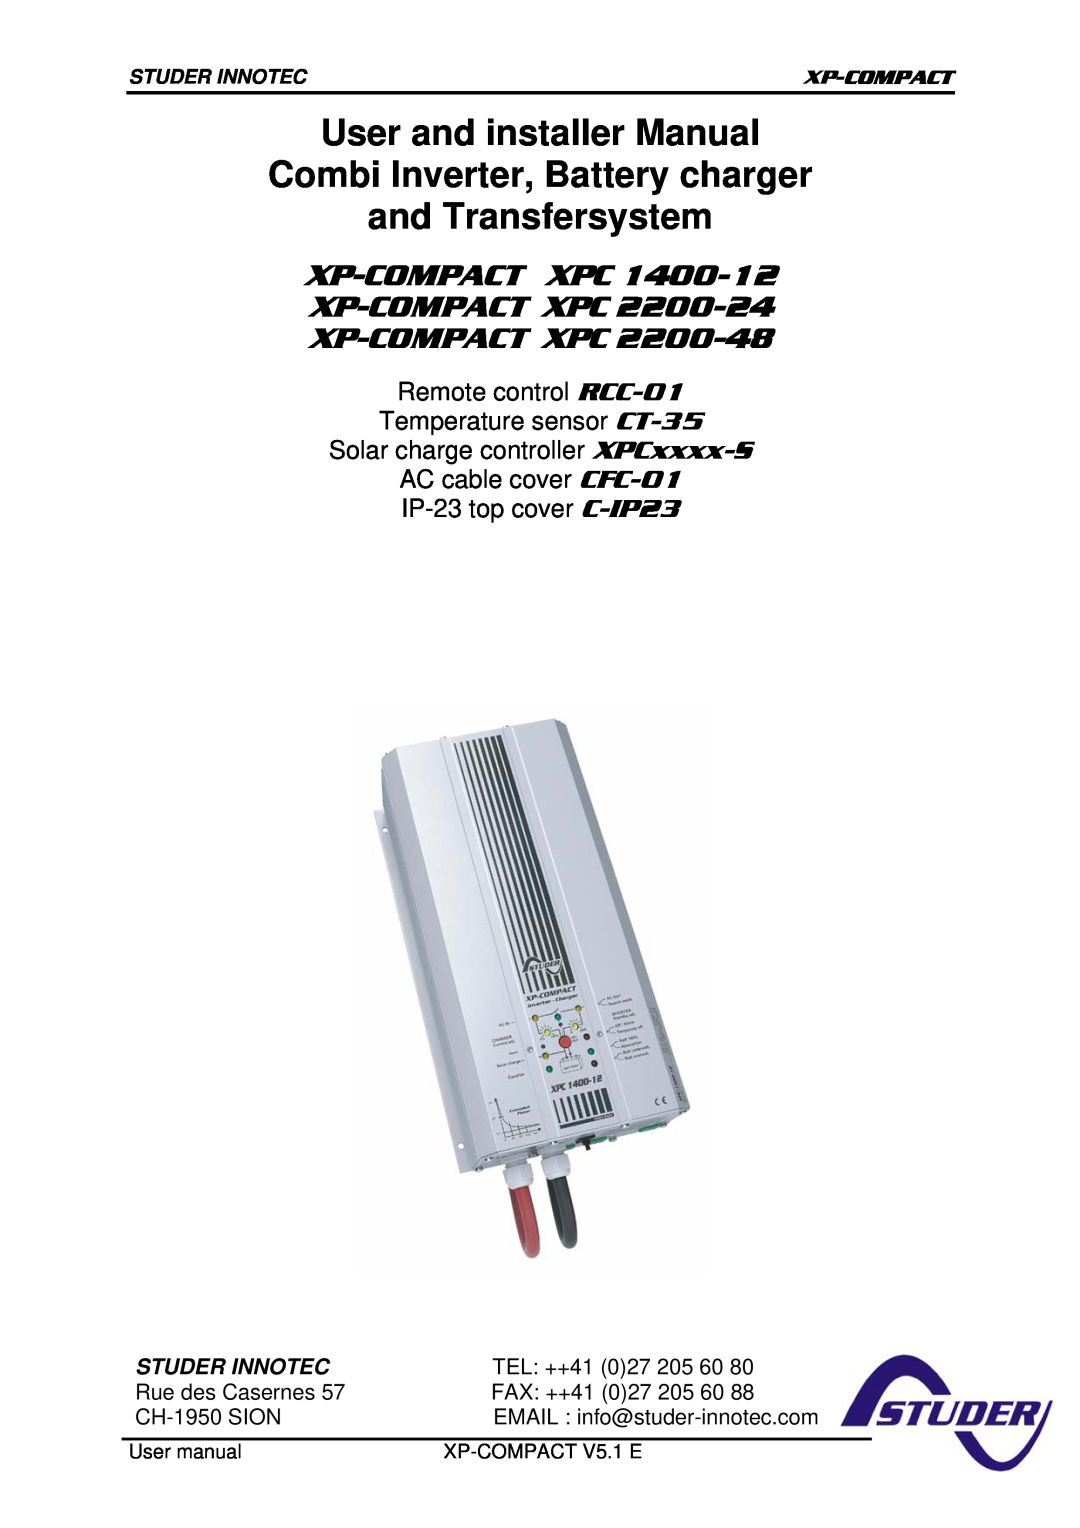 Studer Innotec XPC 2200-24 user manual Studer Innotec, TEL ++41 027 205 60, Rue des Casernes, FAX ++41 027 205 60 